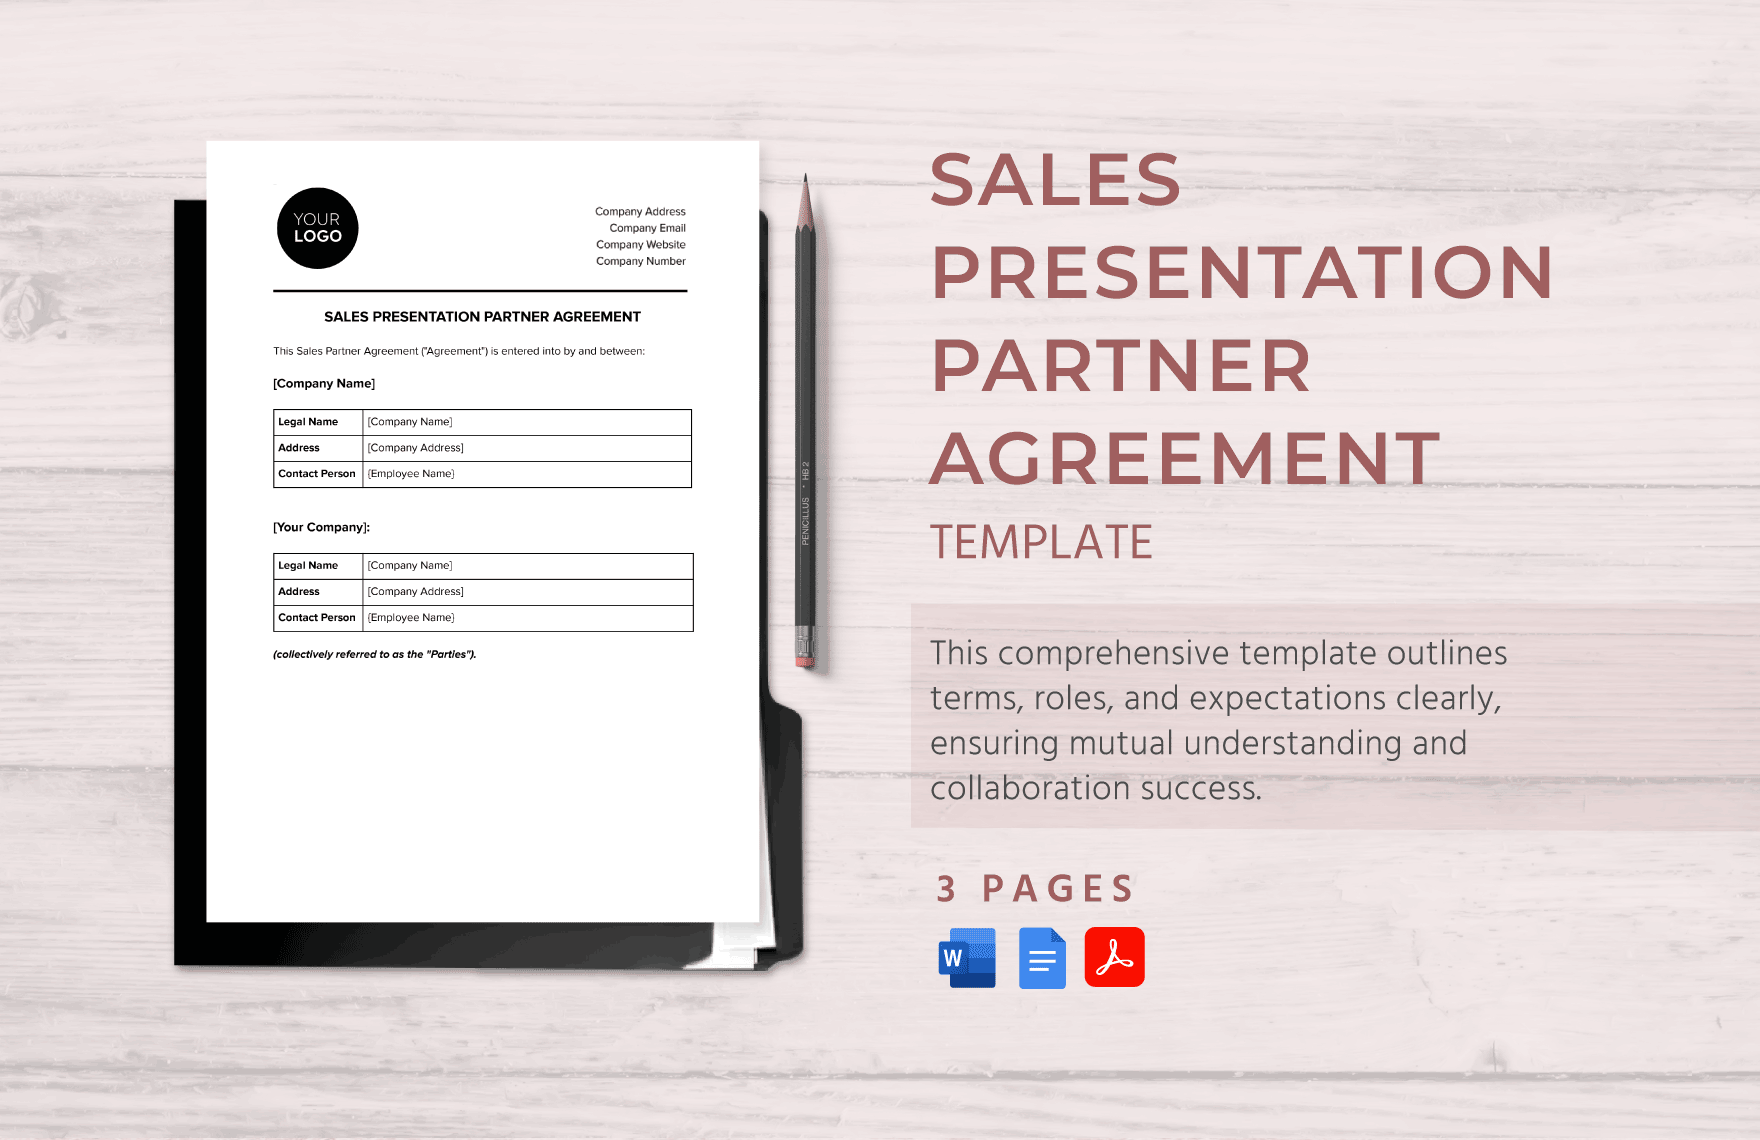 Sales Presentation Partner Agreement Template in Word, Google Docs, PDF